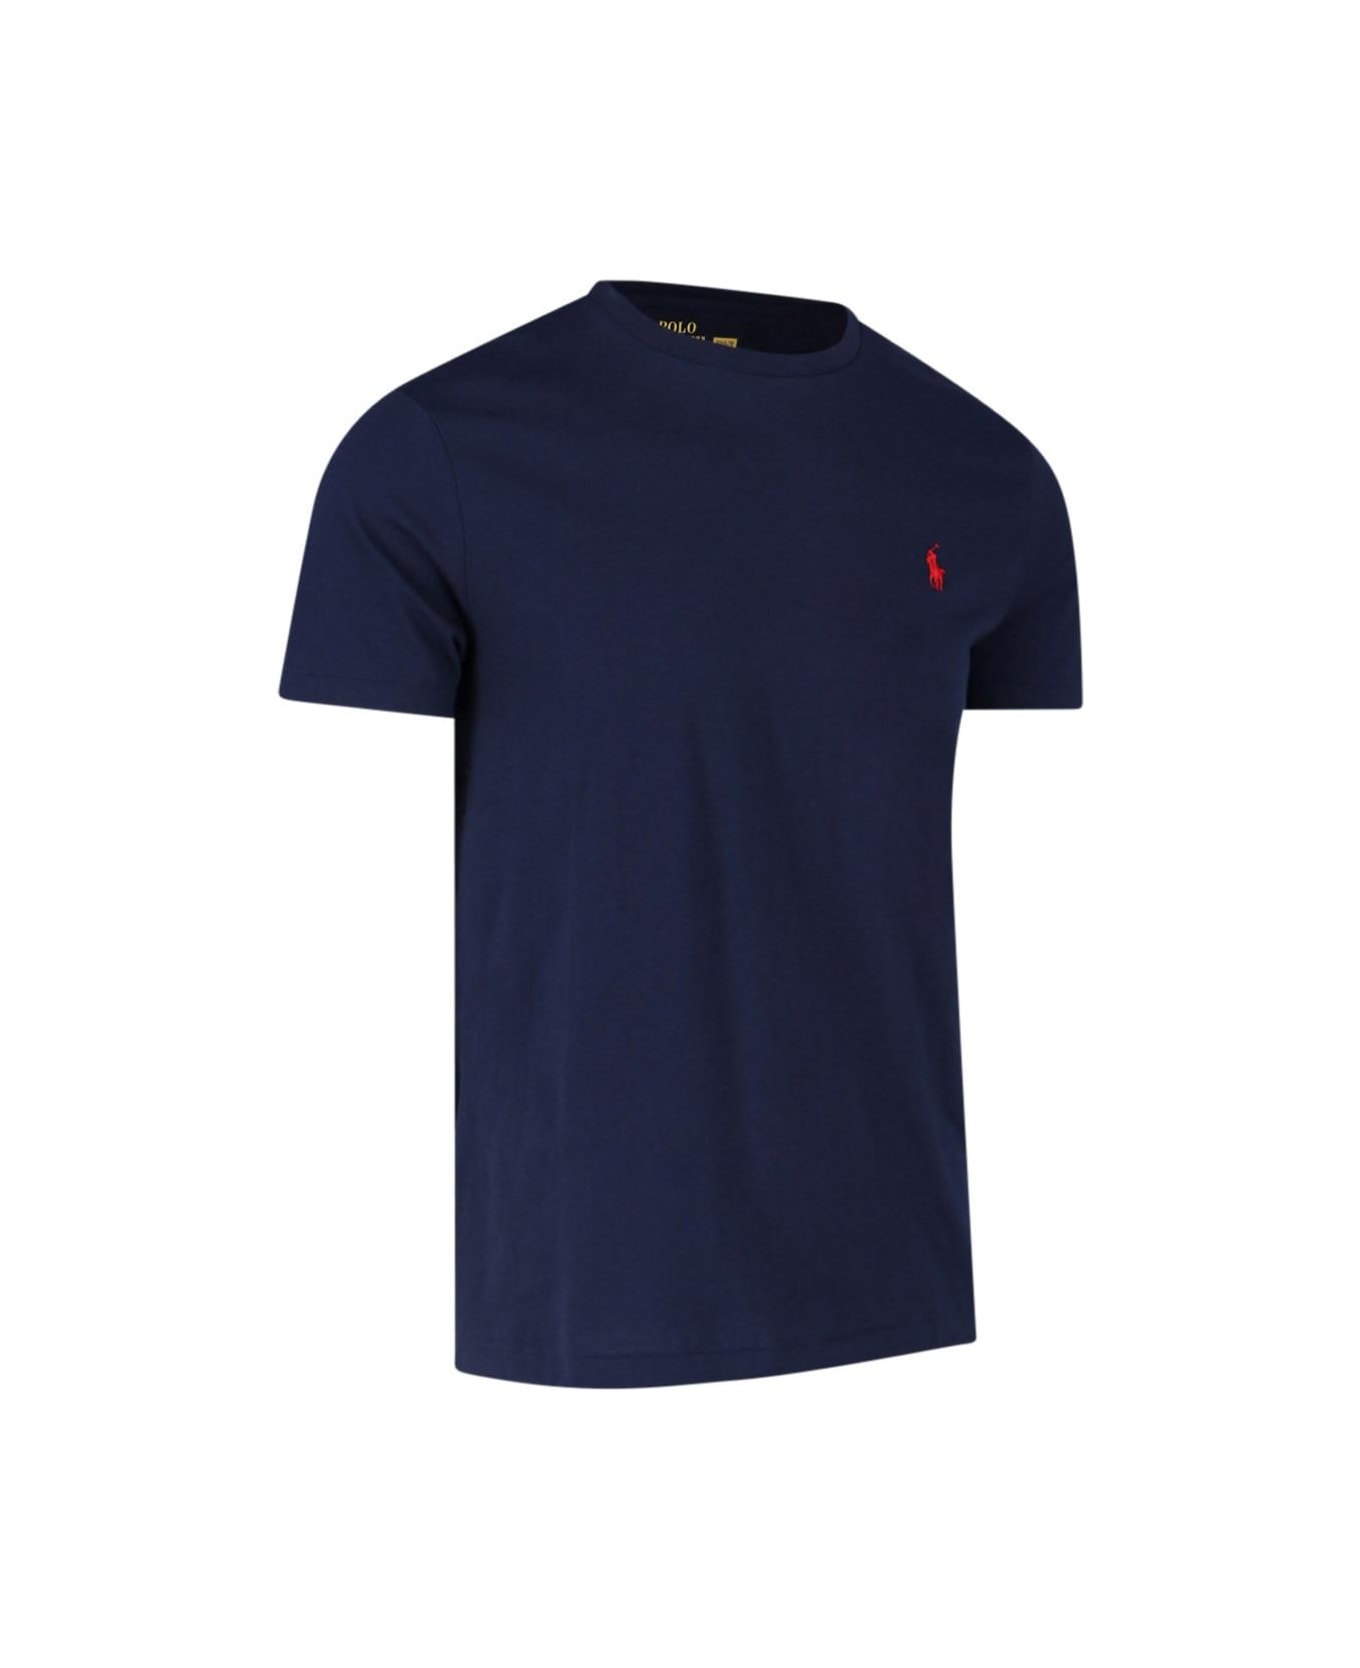 Polo Ralph Lauren Classic Logo T-shirt - Blu